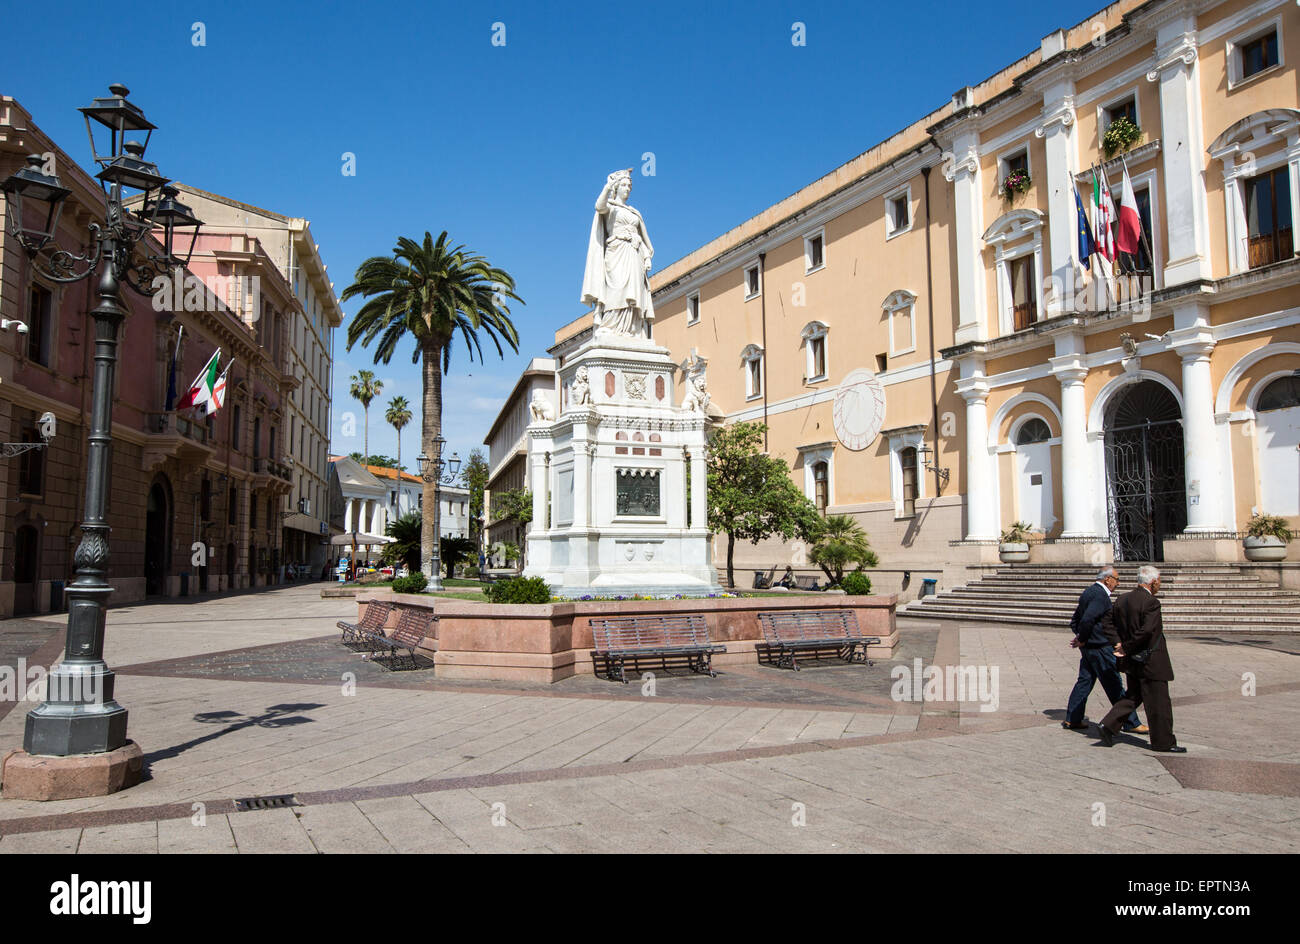 Monument To Eleanora Of Arboria [Heroin Of Sardinian Independence] Central Oristano Sardinia Italy Stock Photo